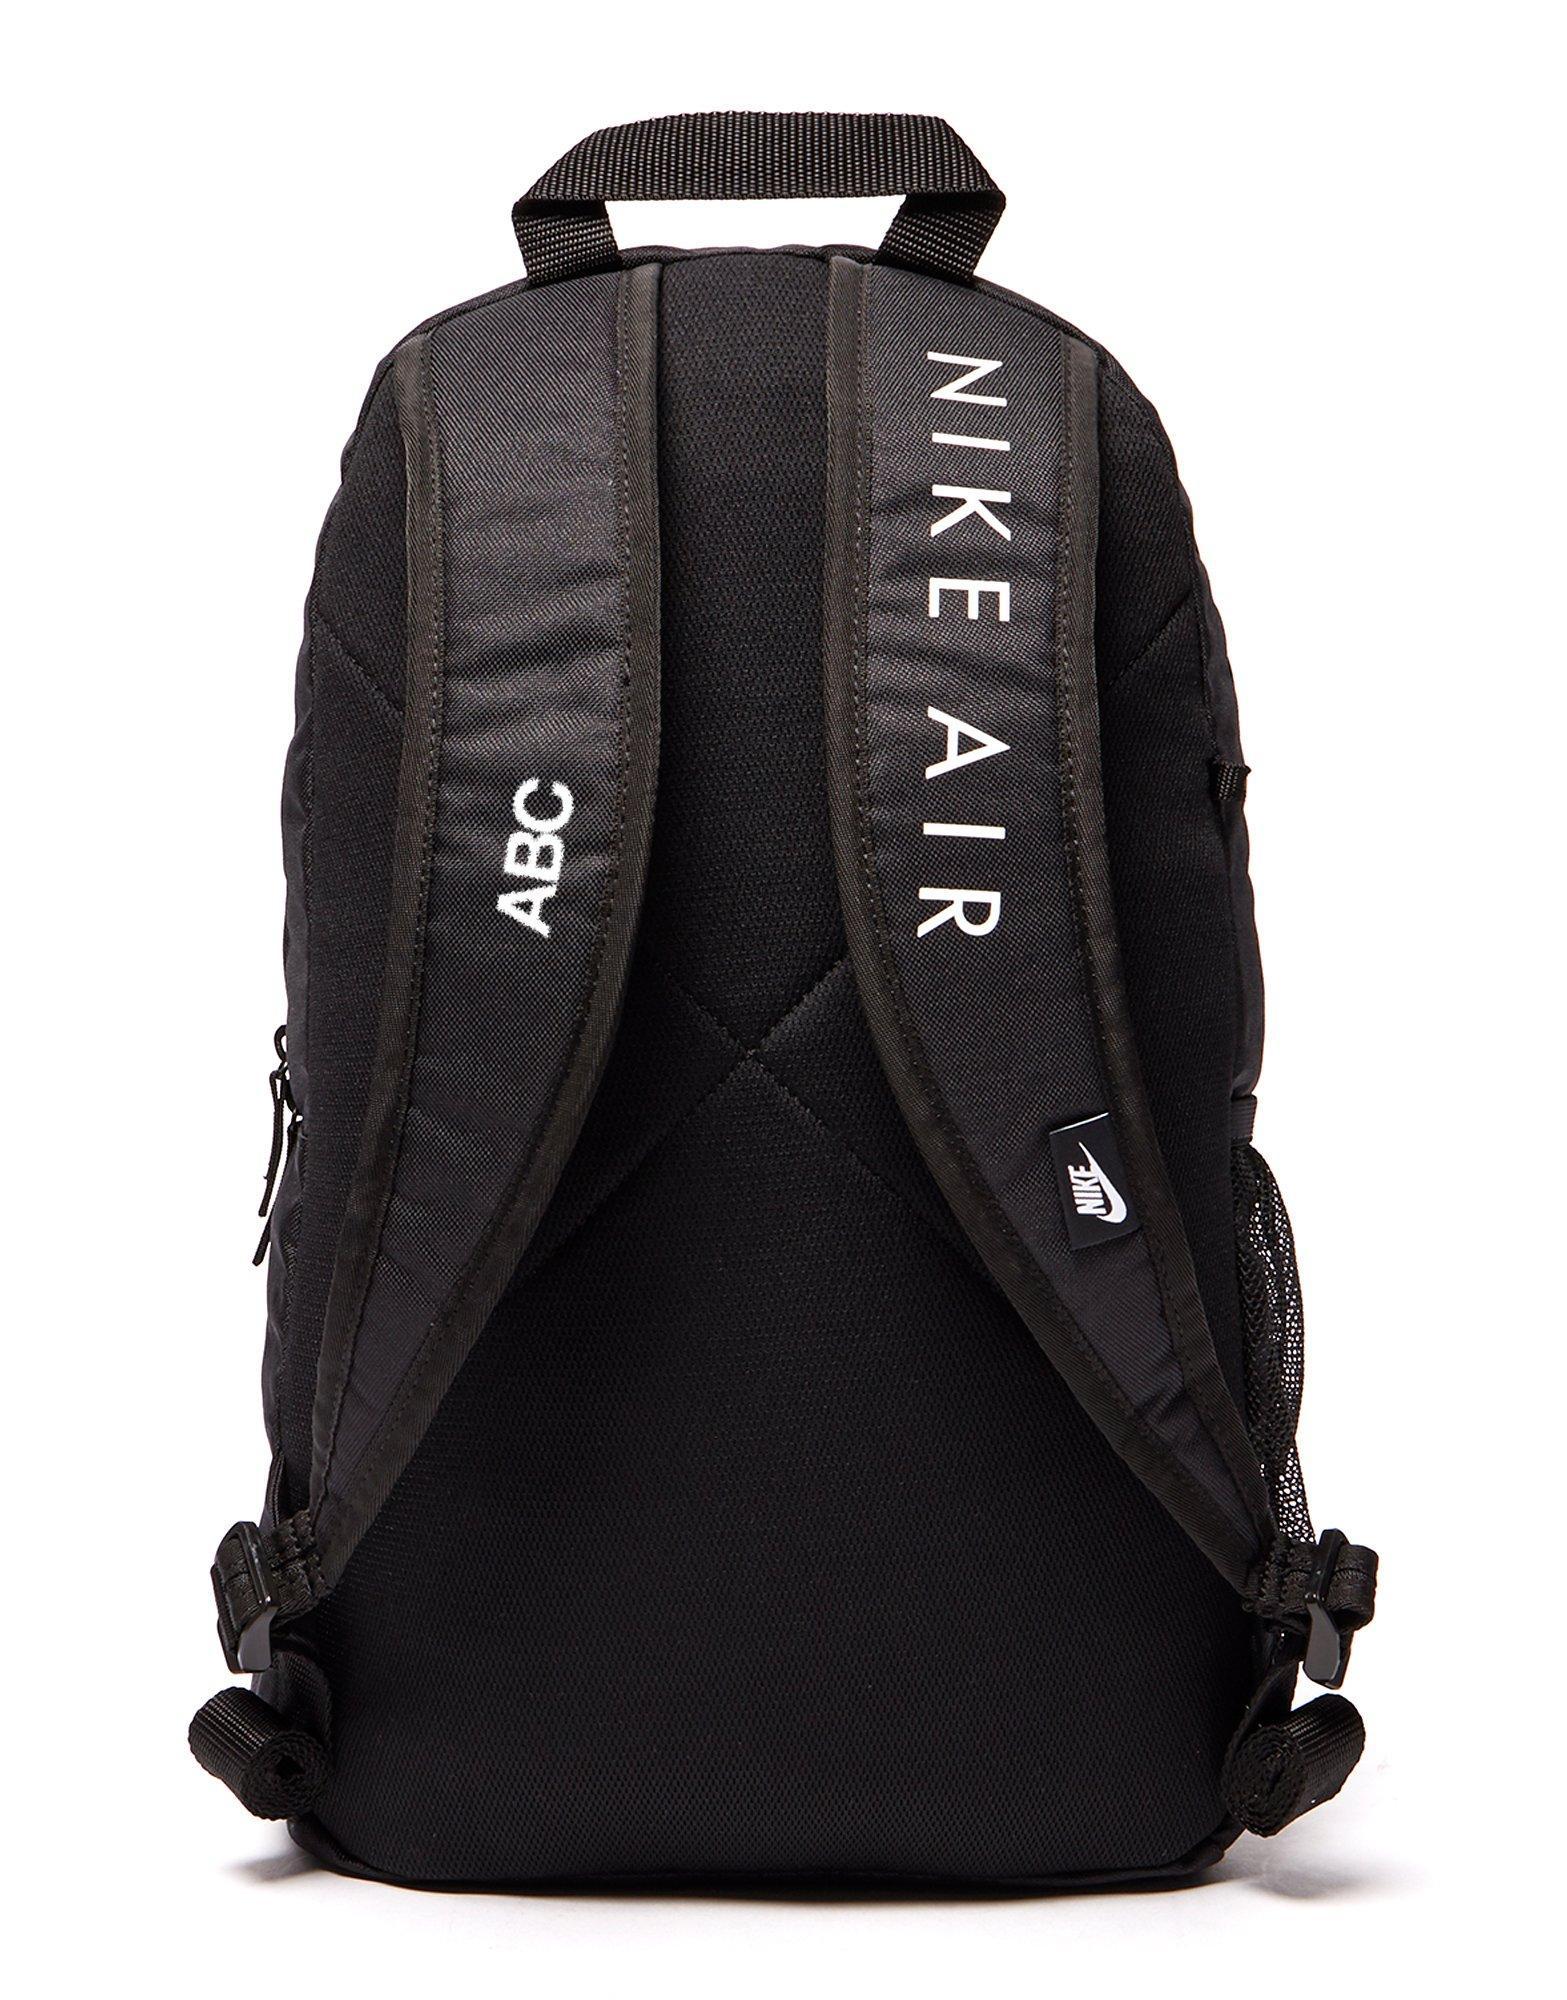 Lyst - Nike Elemental Backpack in Black for Men